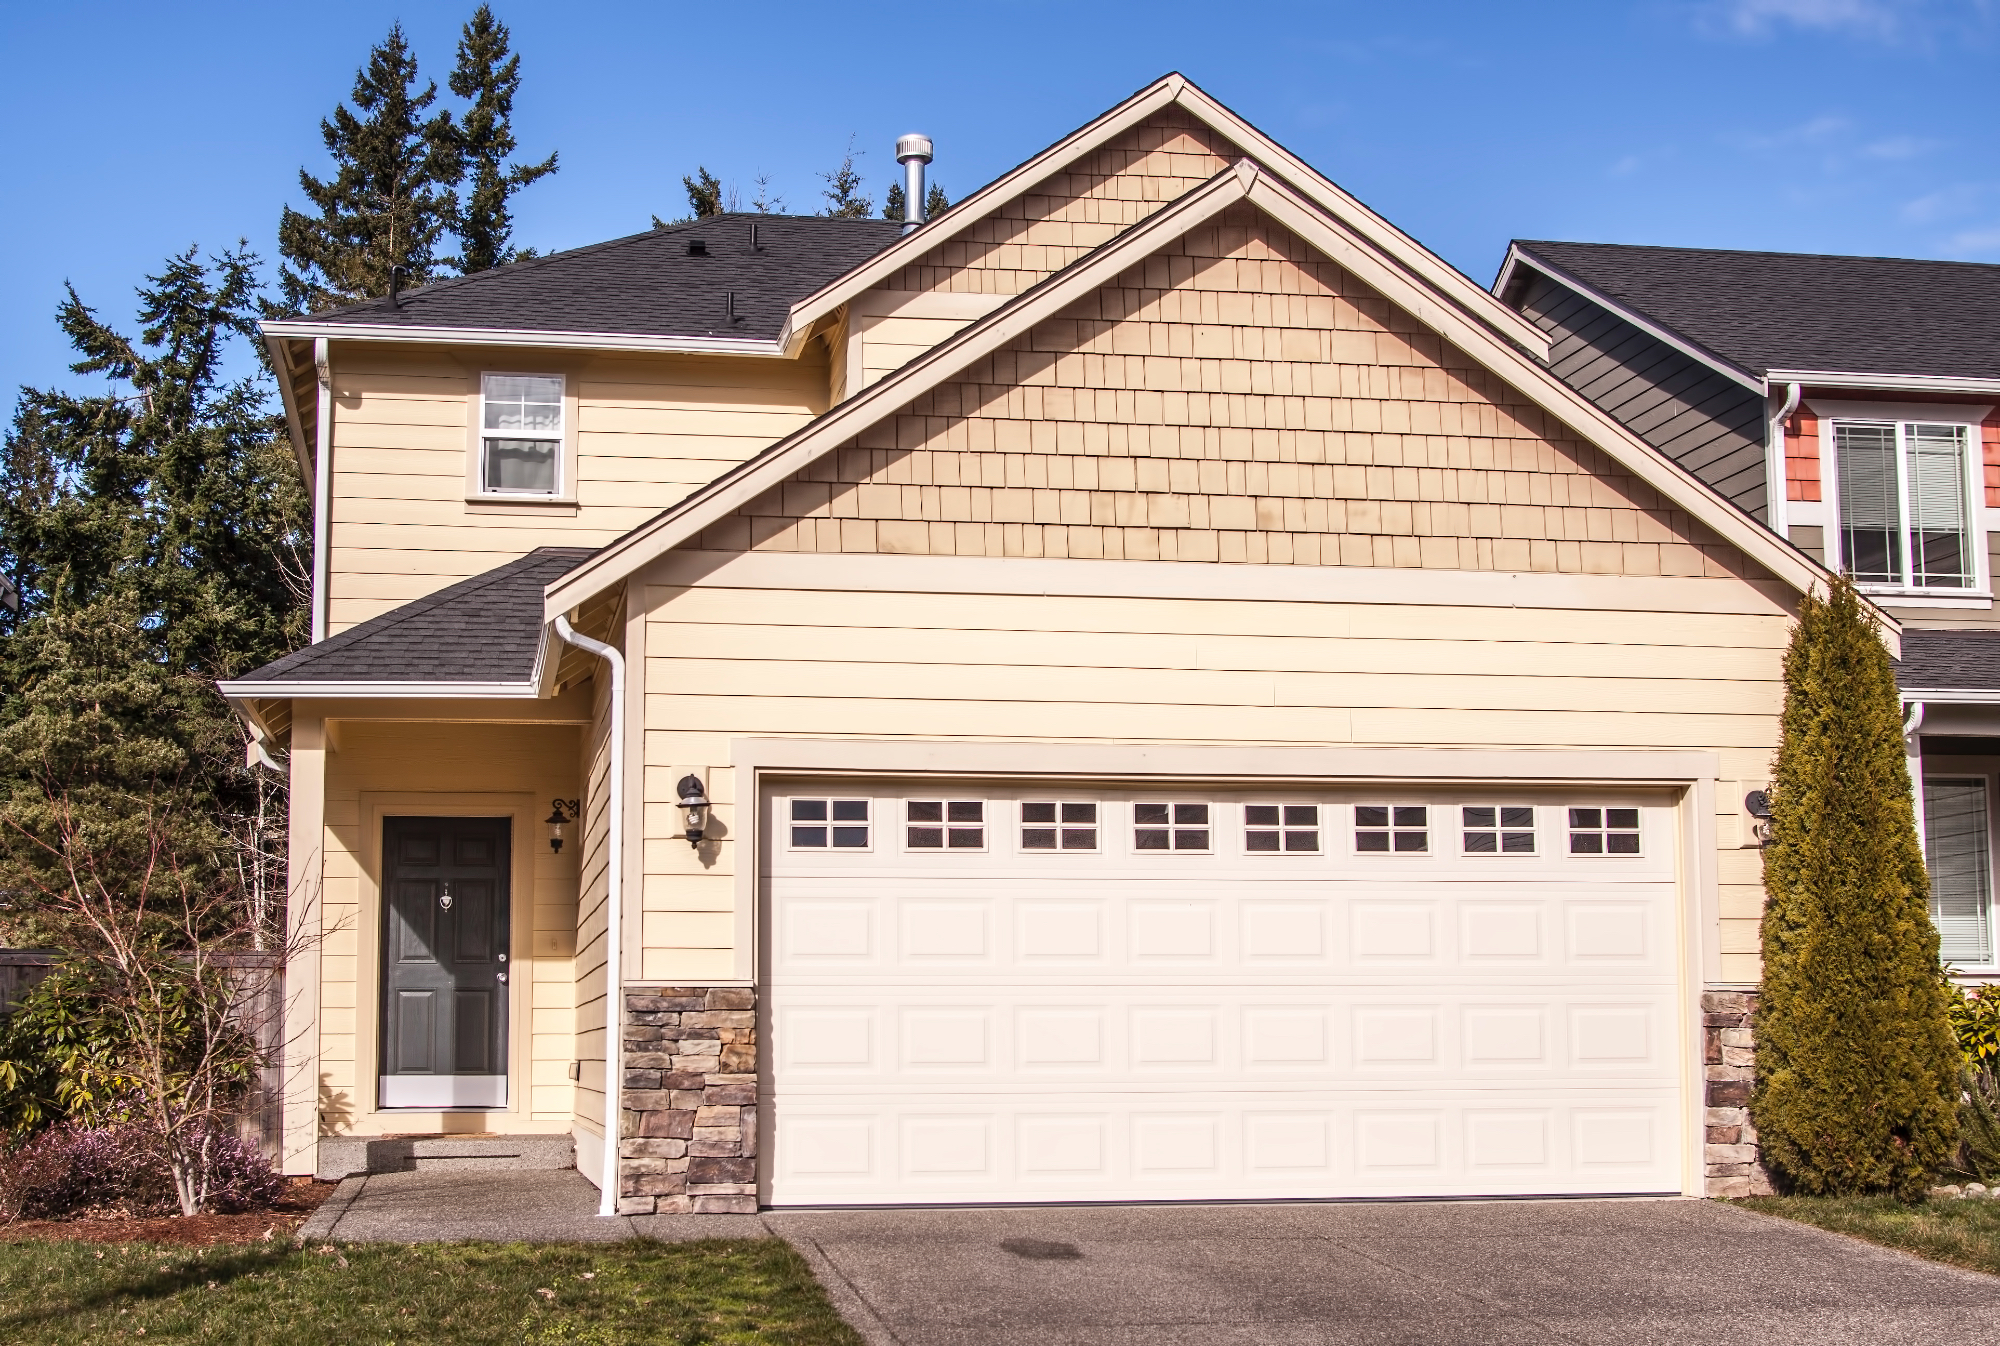 Ali je čas, da izberete nova garažna vrata za vaš dom?